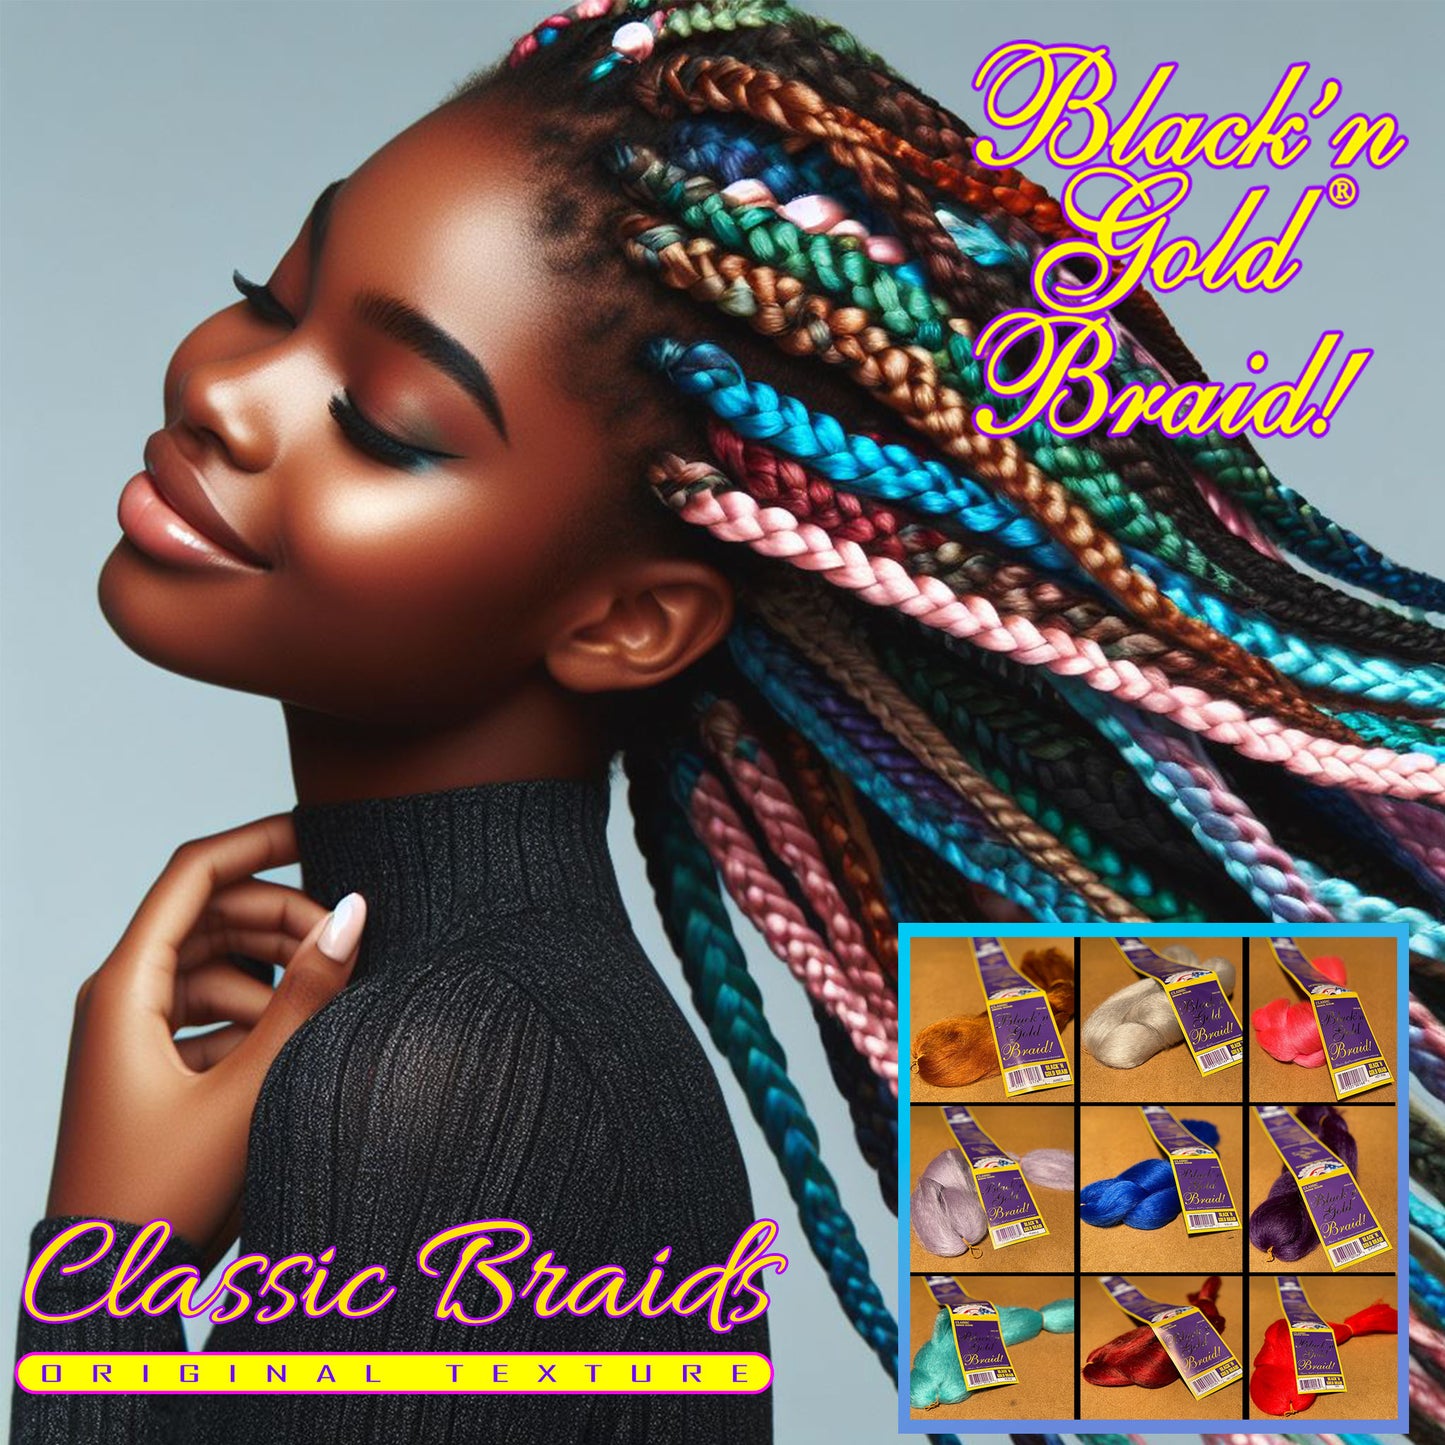 10 Pack Value Deal - Black 'n Gold Classic Braids - 100% Kanekalon Braiding Hair for Sleek and Stylish Looks